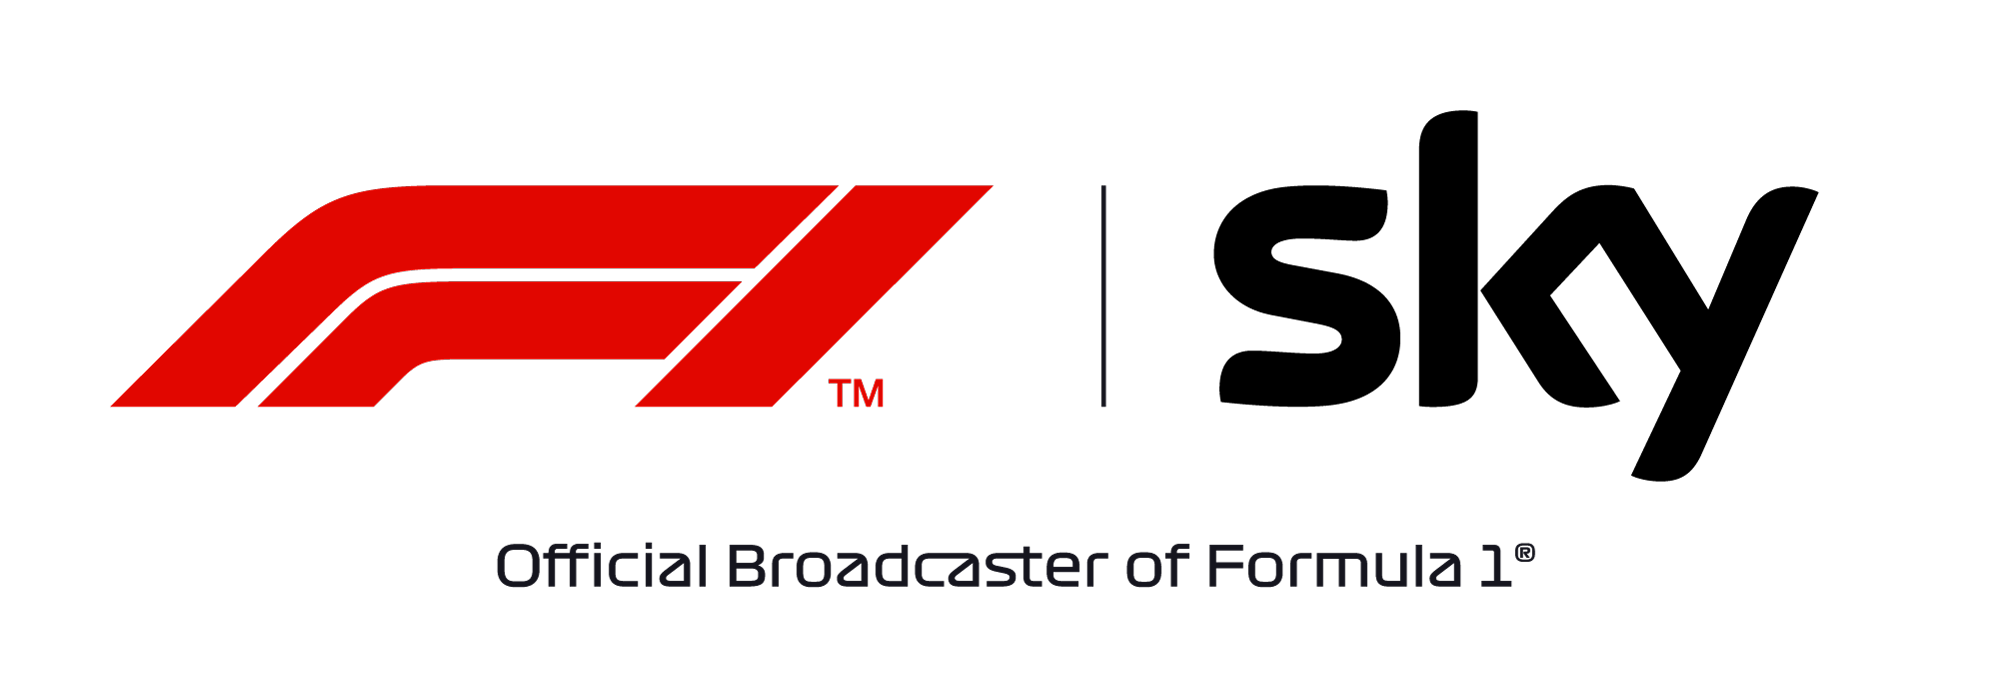 formula 1 broadcast rights